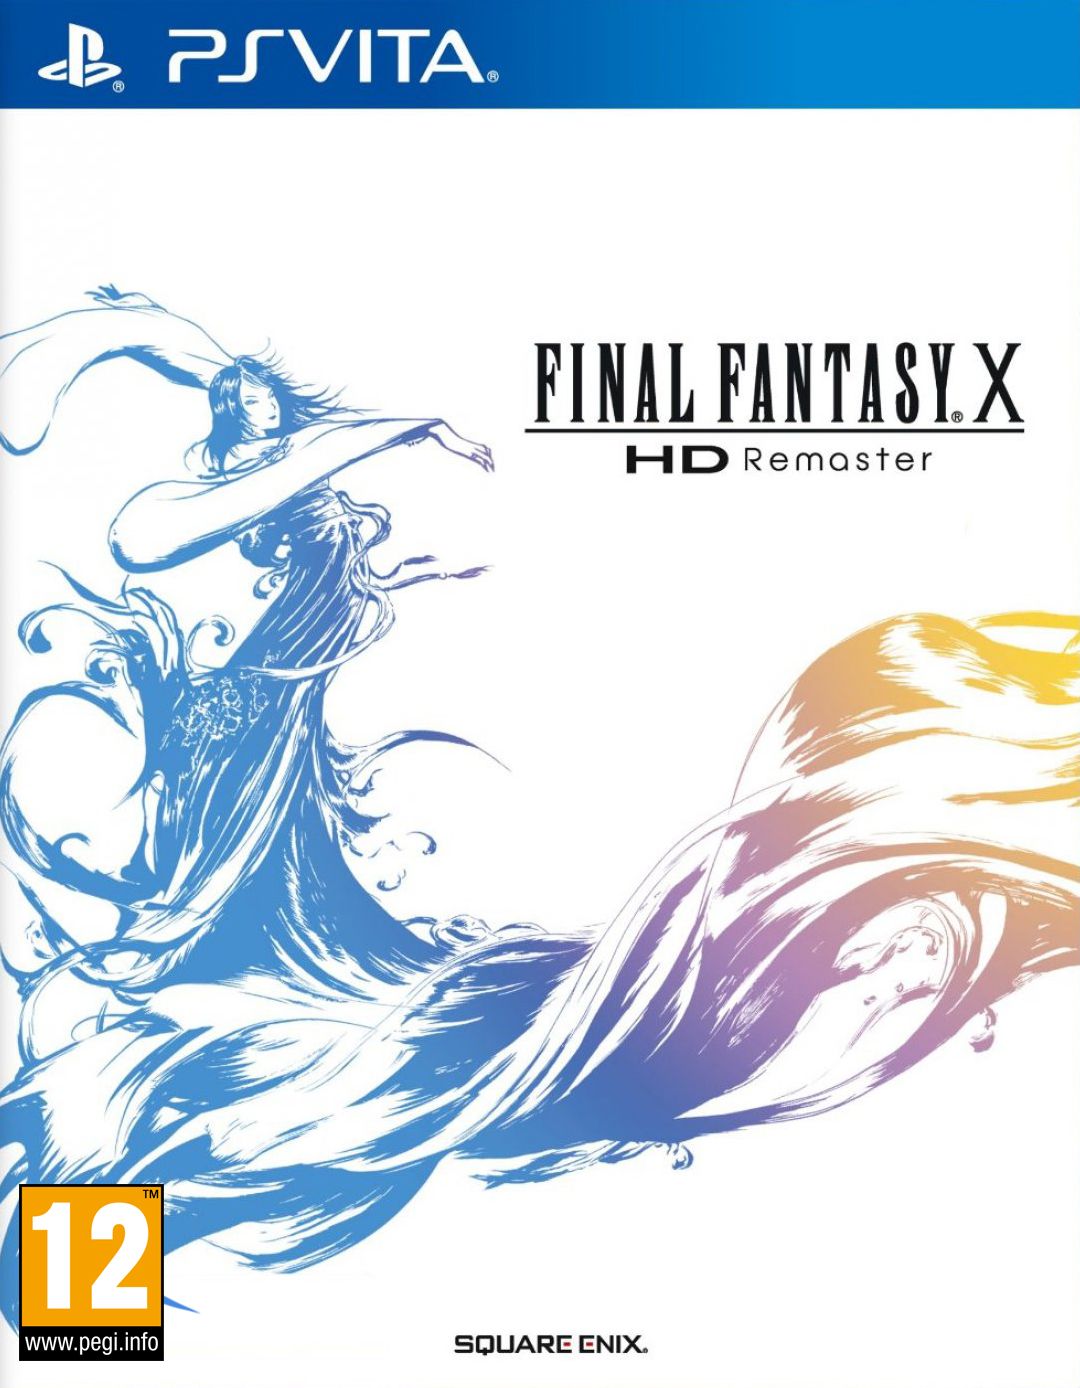 download final fantasy x 2 hd remaster ps vita